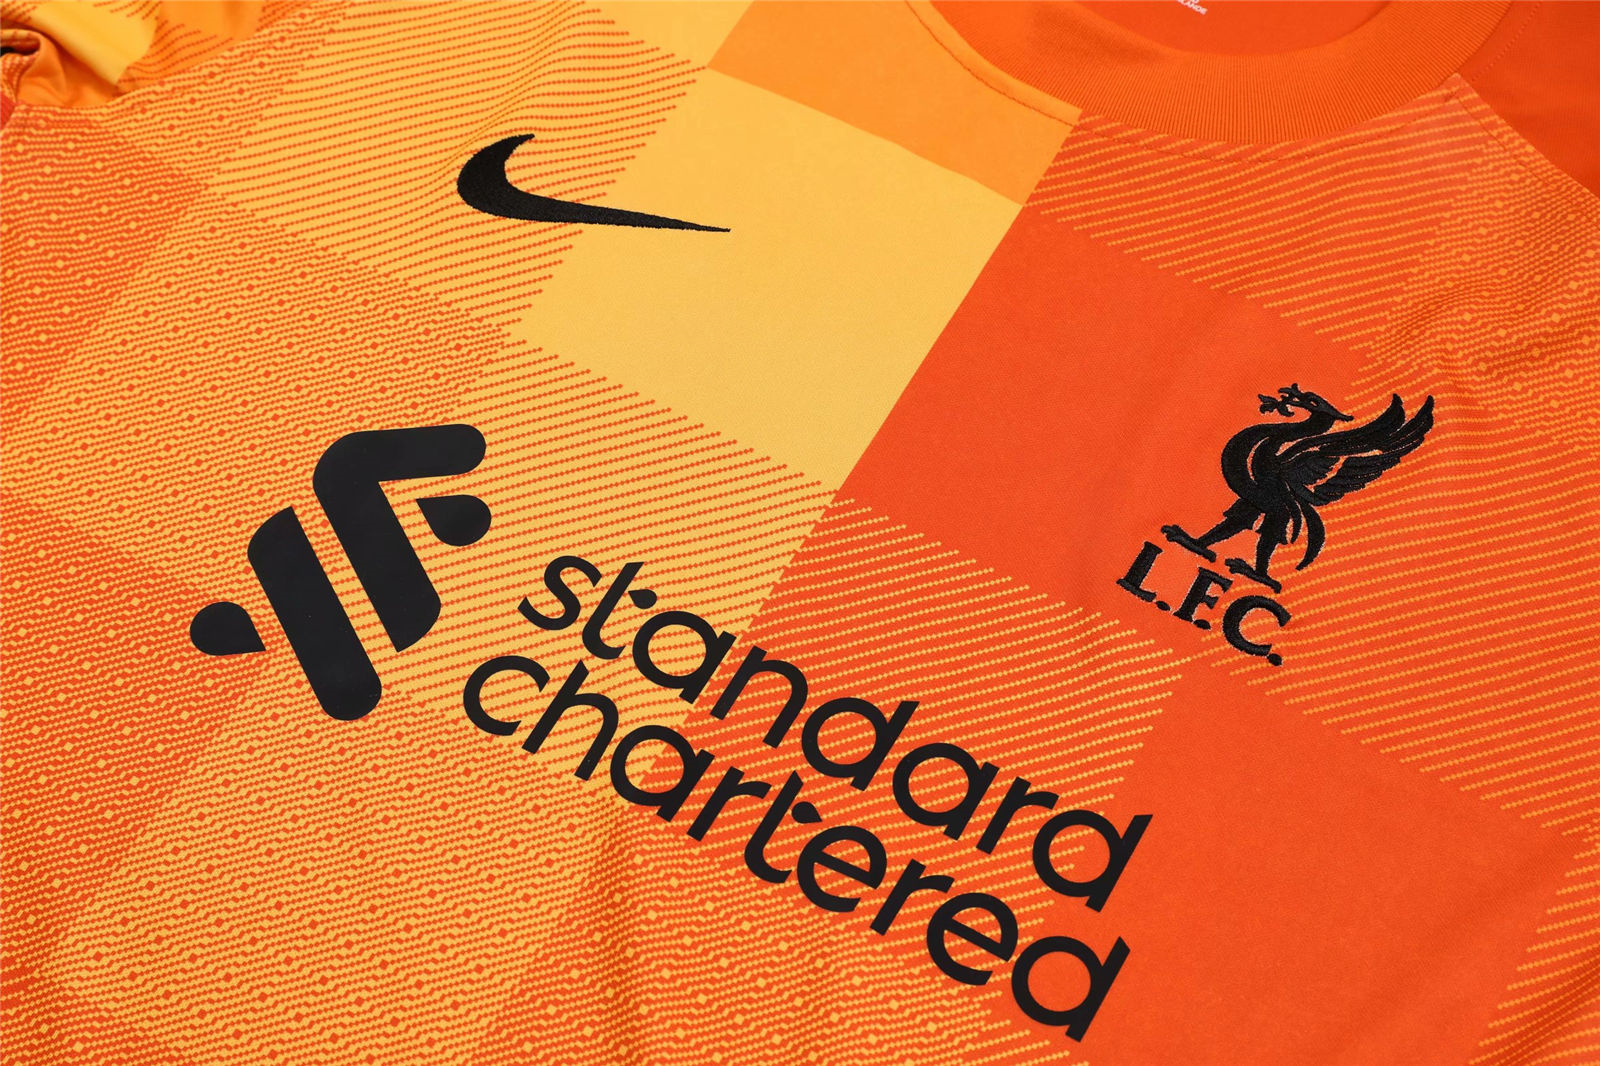 Liverpool Soccer Jersey + Short Replica Goalkeeper Orange Long Sleeve Mens 2021/22